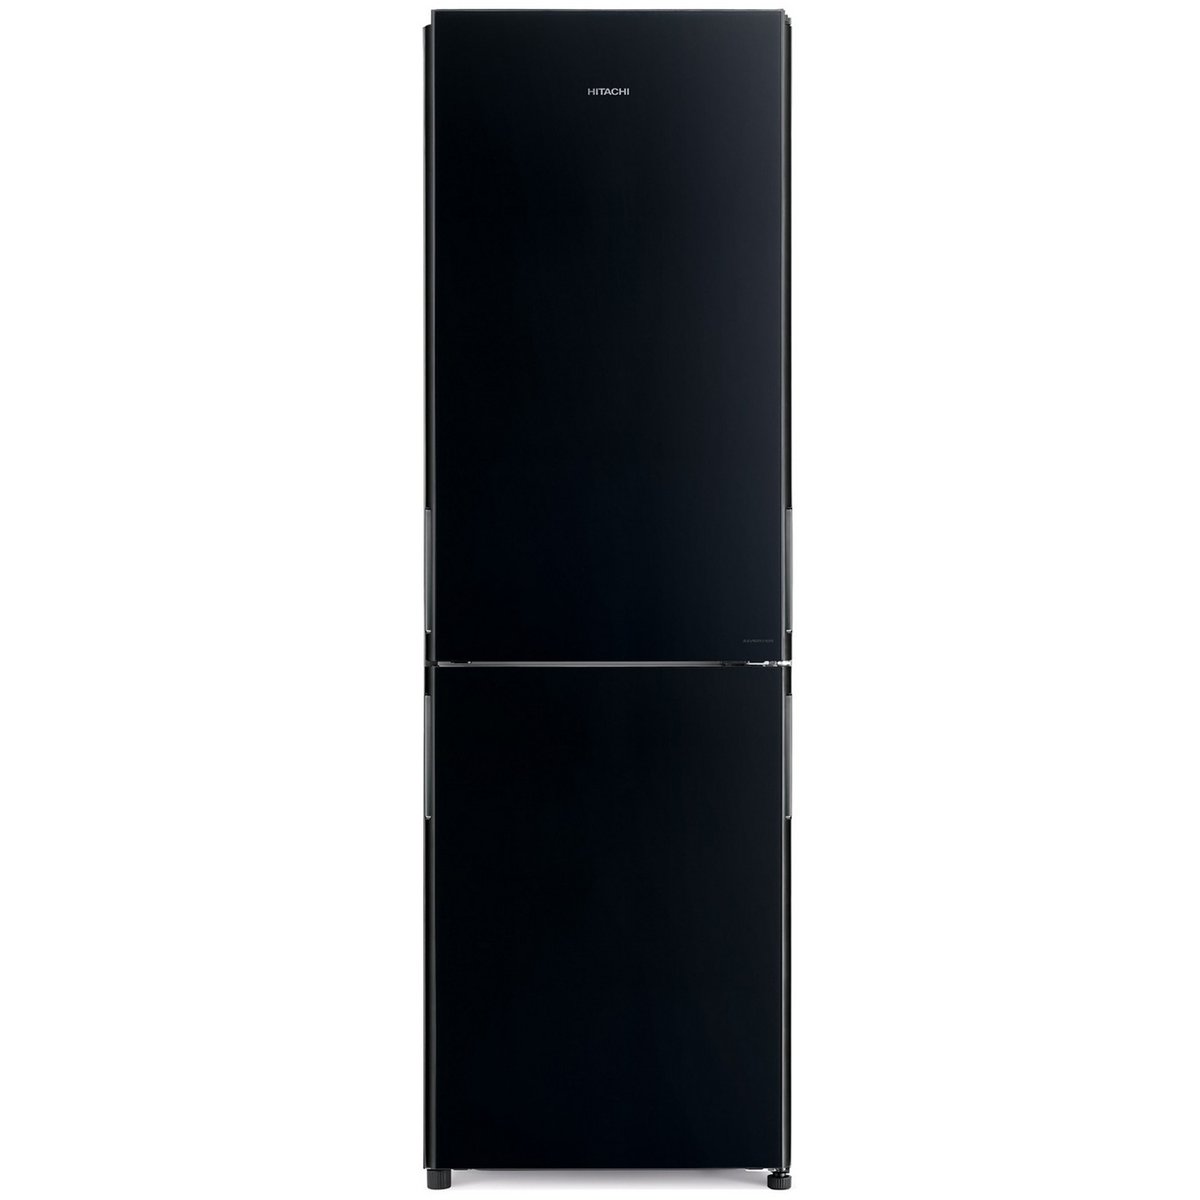 Hitachi Bottom Freezer Refrigerator RBG410PUK6GBK 410Ltr